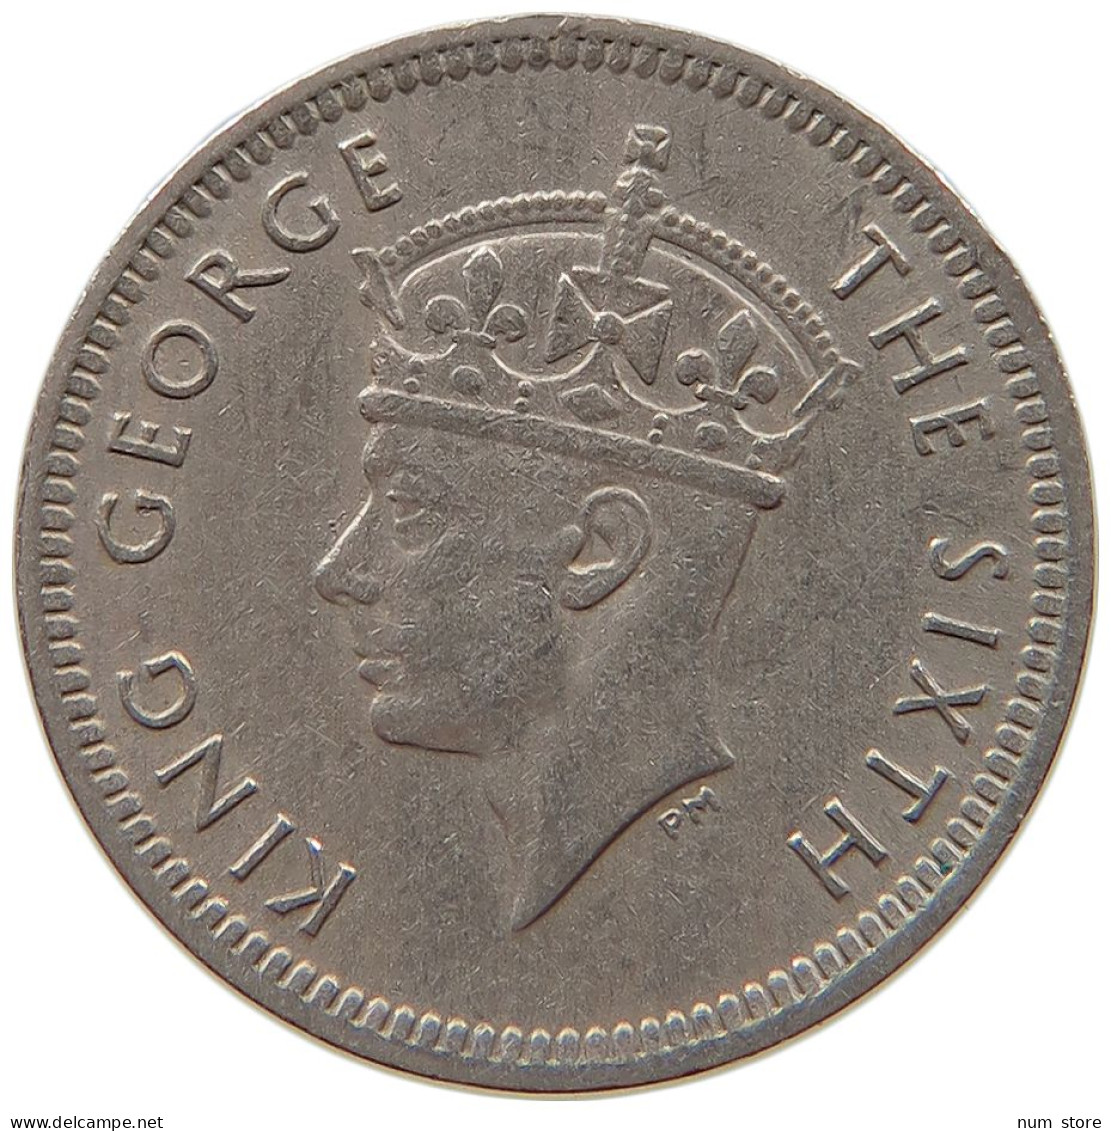 SOUTHERN RHODESIA 3 PENCE 1952 George VI. (1936-1952) #s028 0251 - Rhodesia